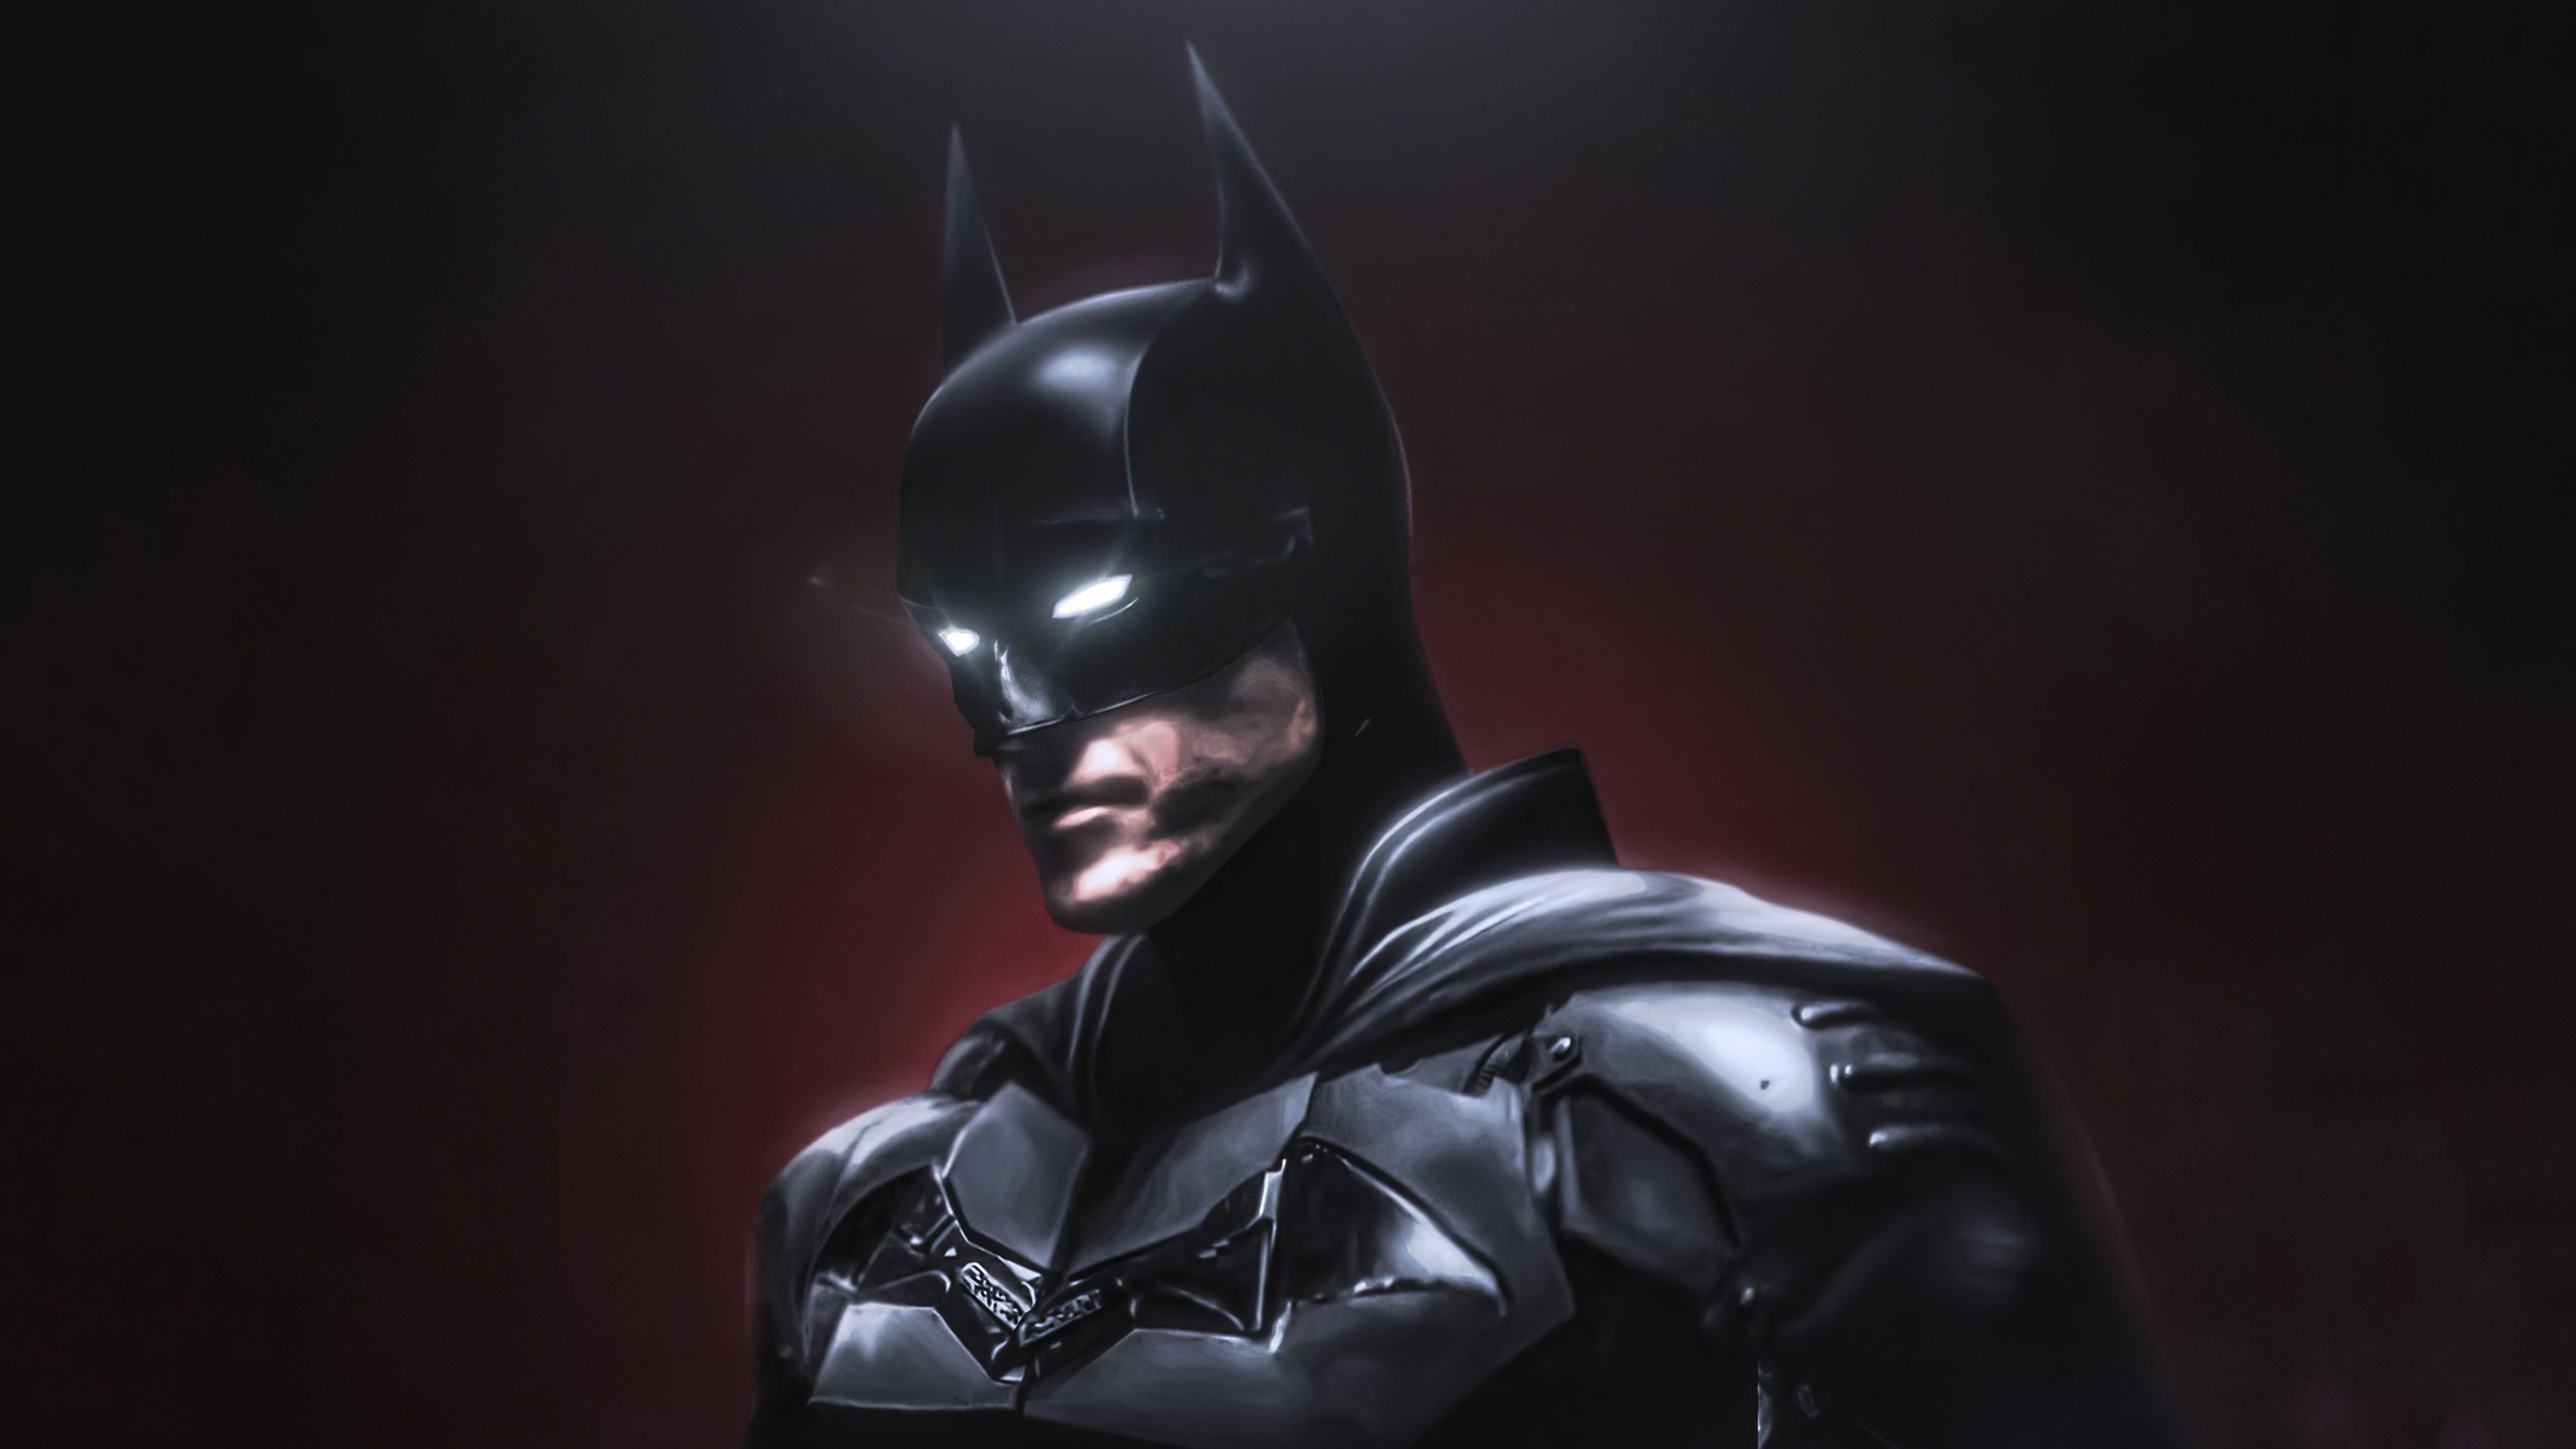 Robert Pattison New Batman Laptop Full HD 1080P HD 4k Wallpaper, Image, Background, Photo and Picture